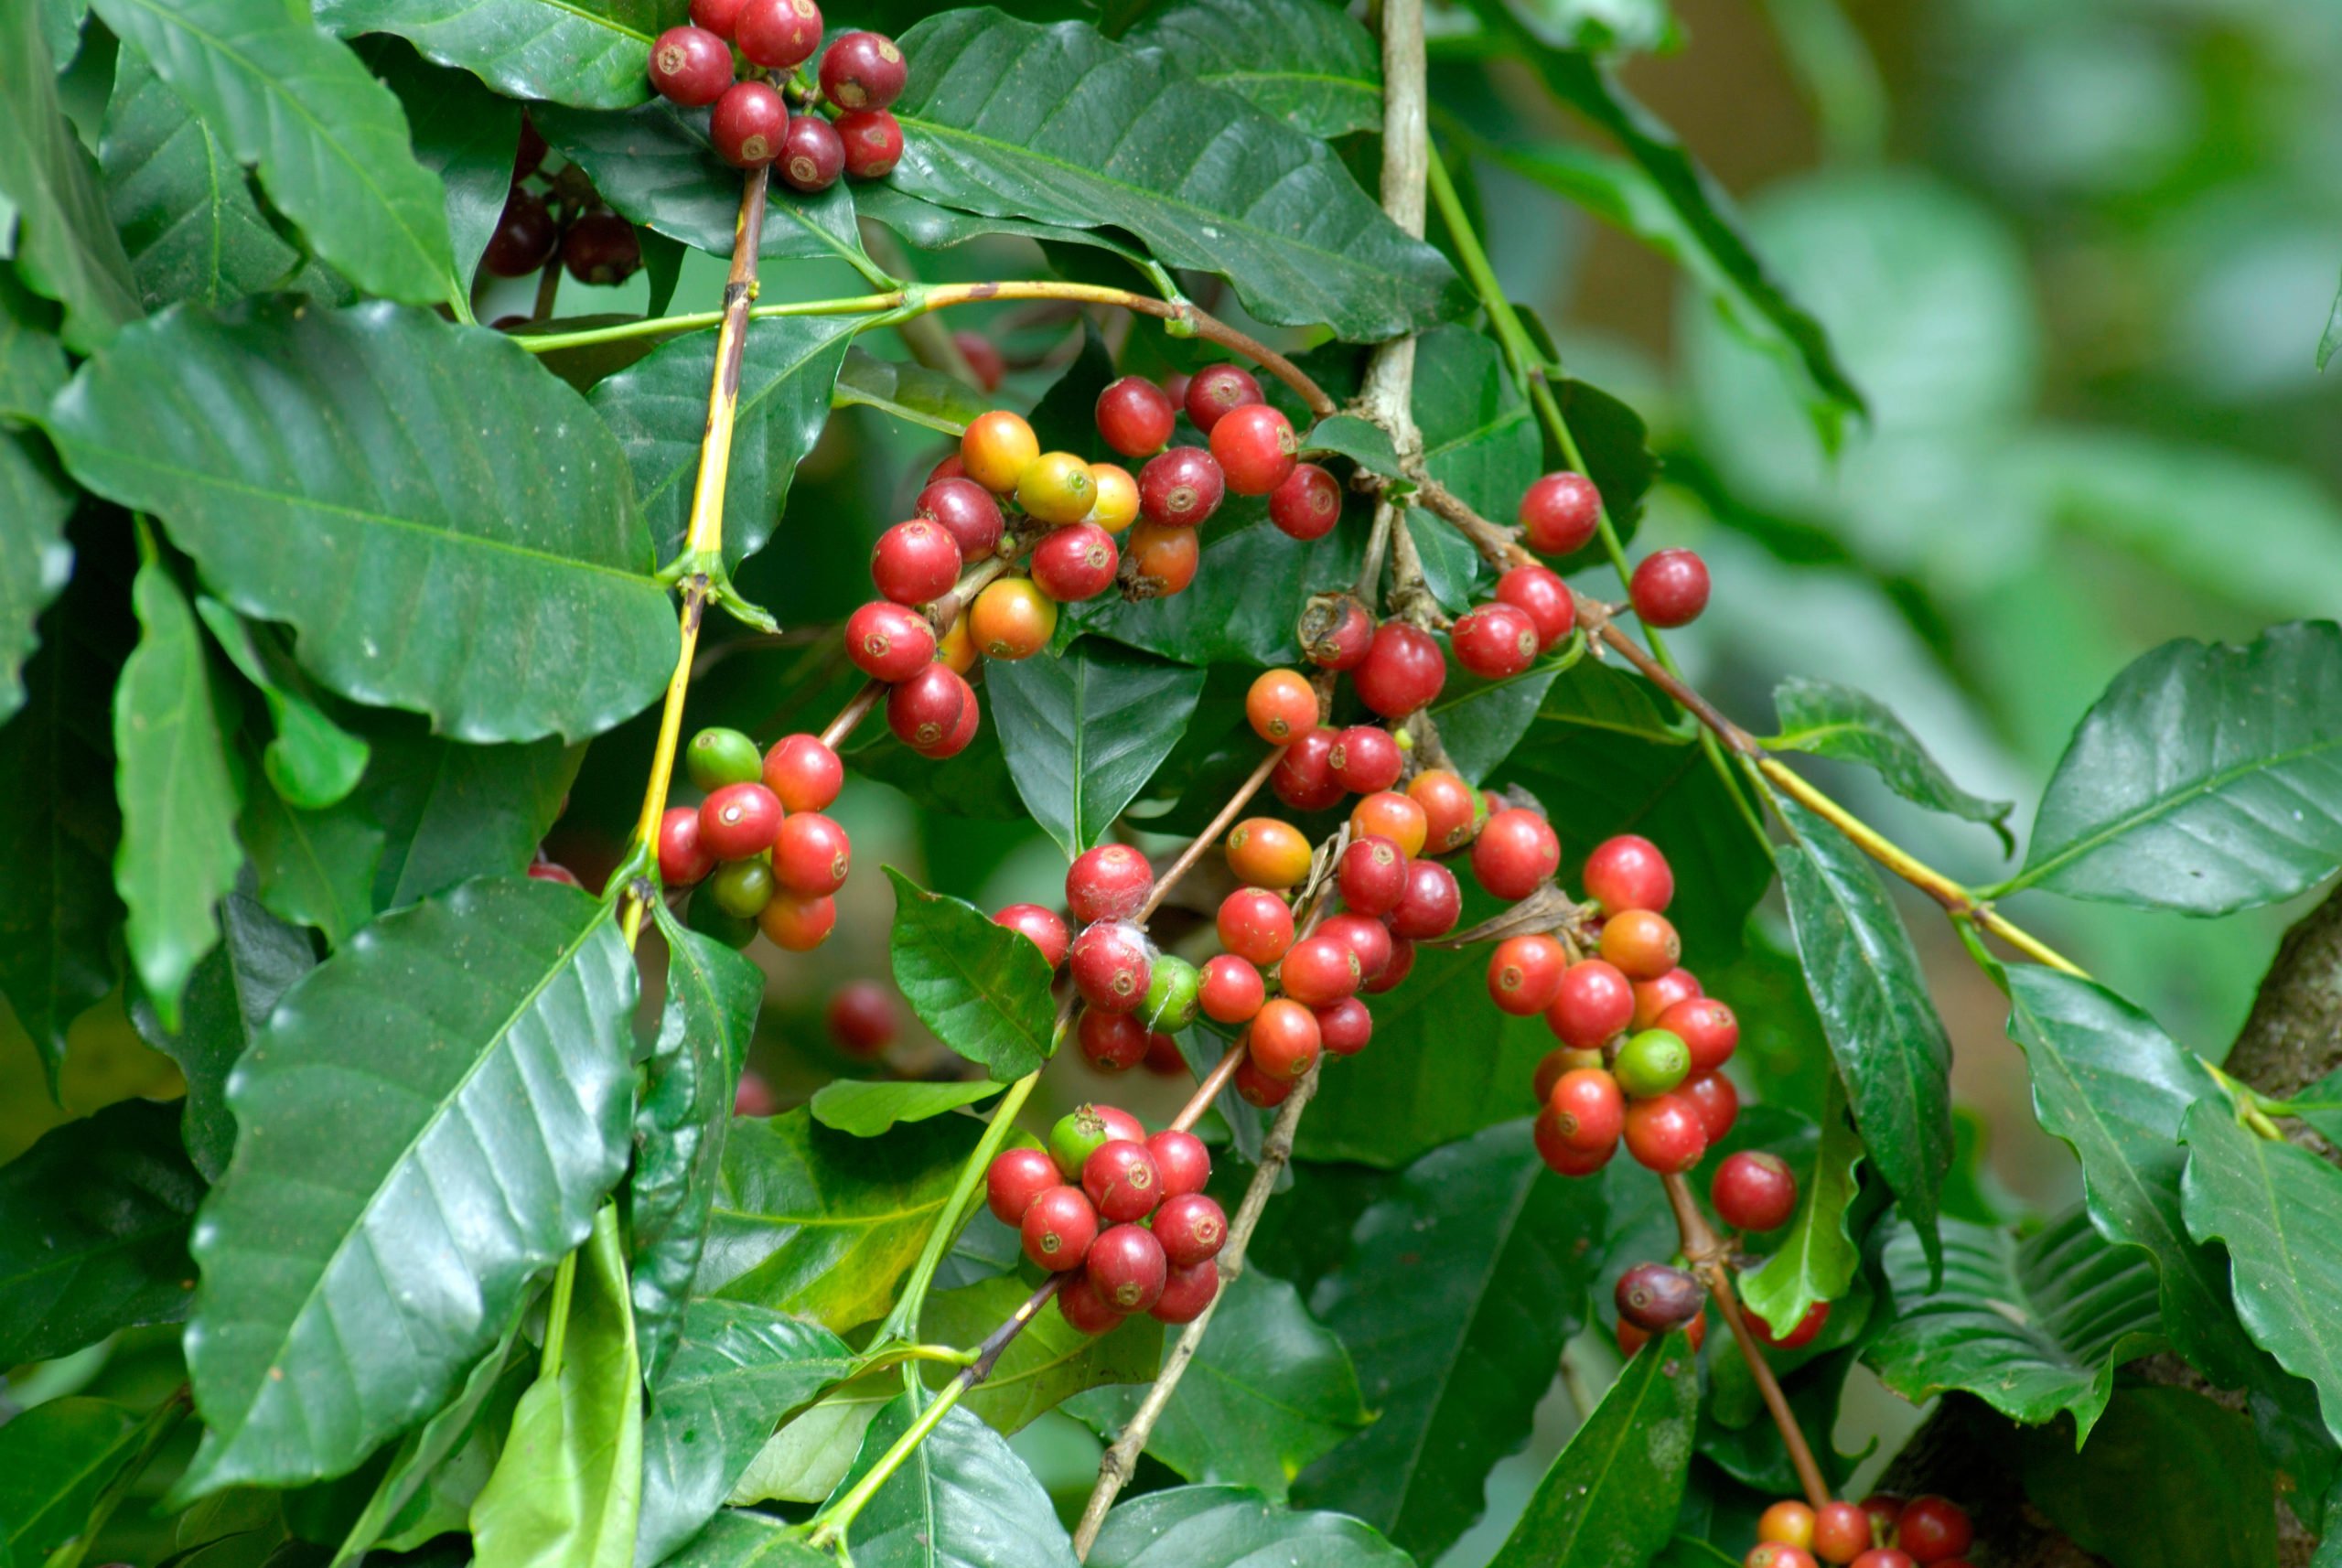 Coffee berries on a coffee plant in Karnataka, India